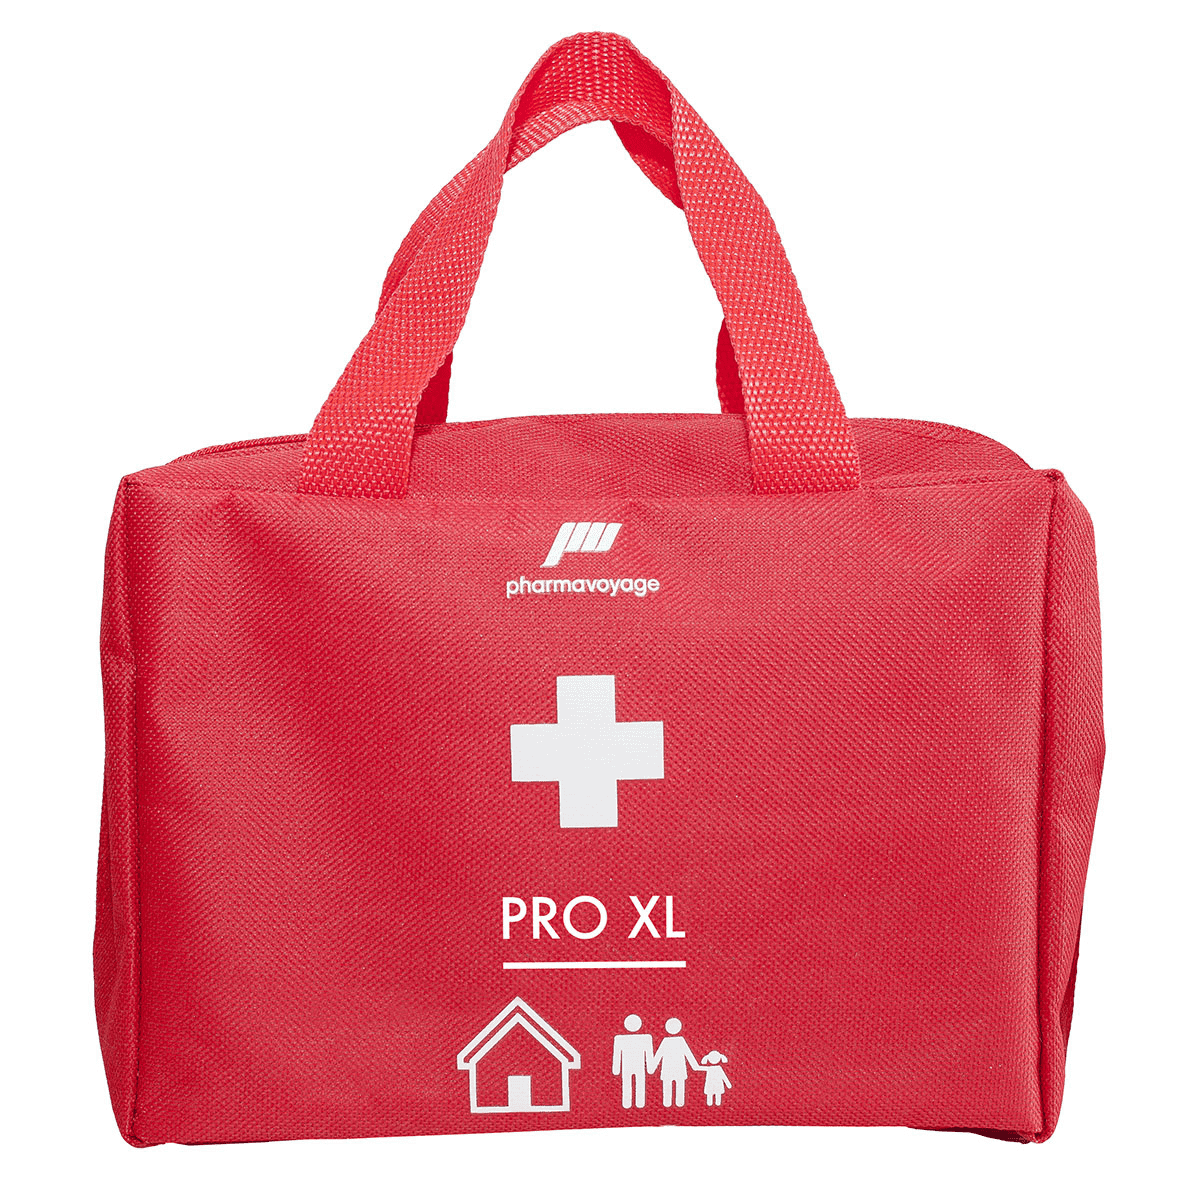 Pharmavoyage Trousse de secours - First aid kit